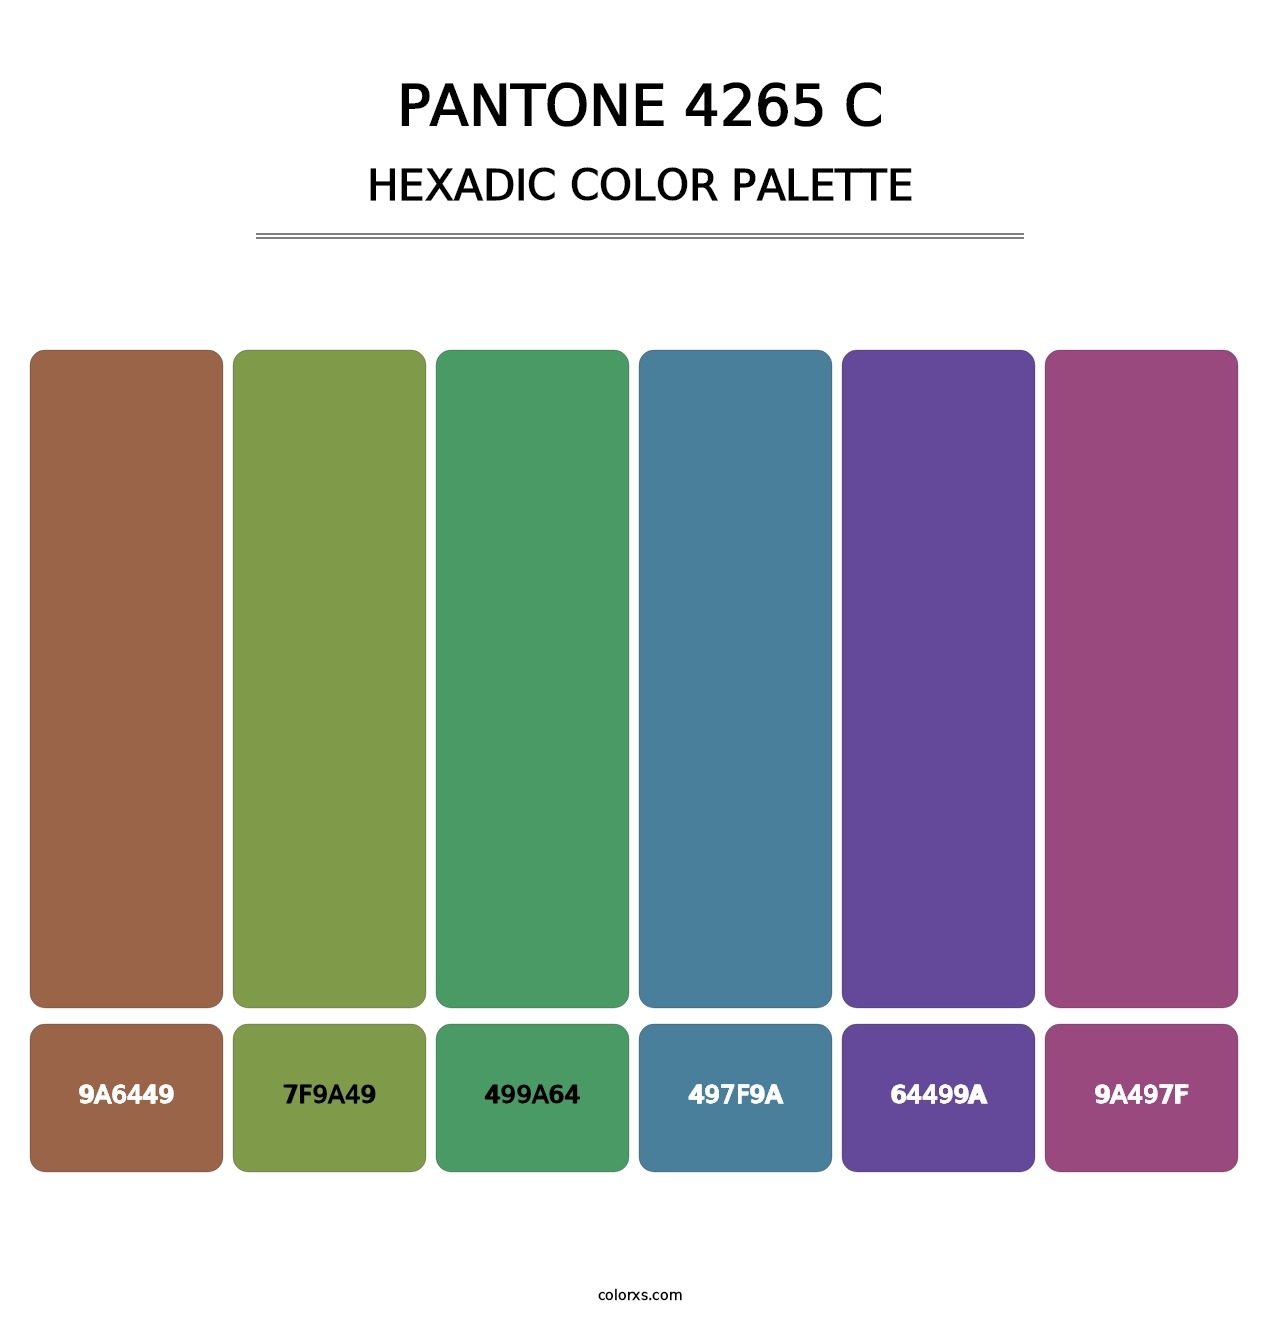 PANTONE 4265 C - Hexadic Color Palette